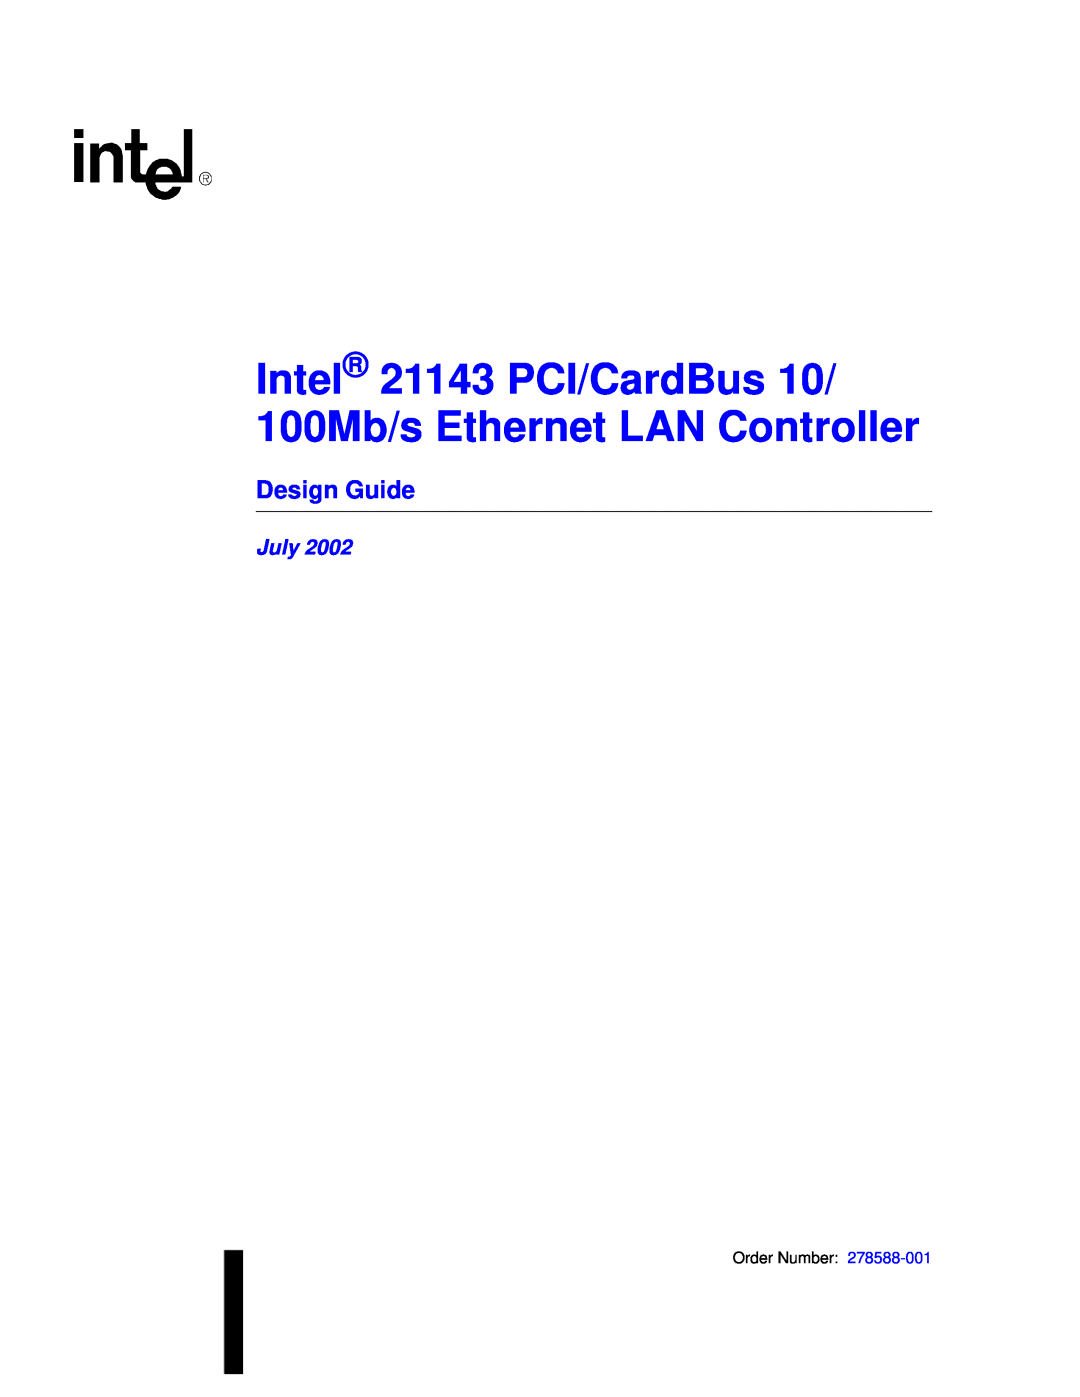 Intel manual Design Guide, Intel 21143 PCI/CardBus 10/ 100Mb/s Ethernet LAN Controller, July 